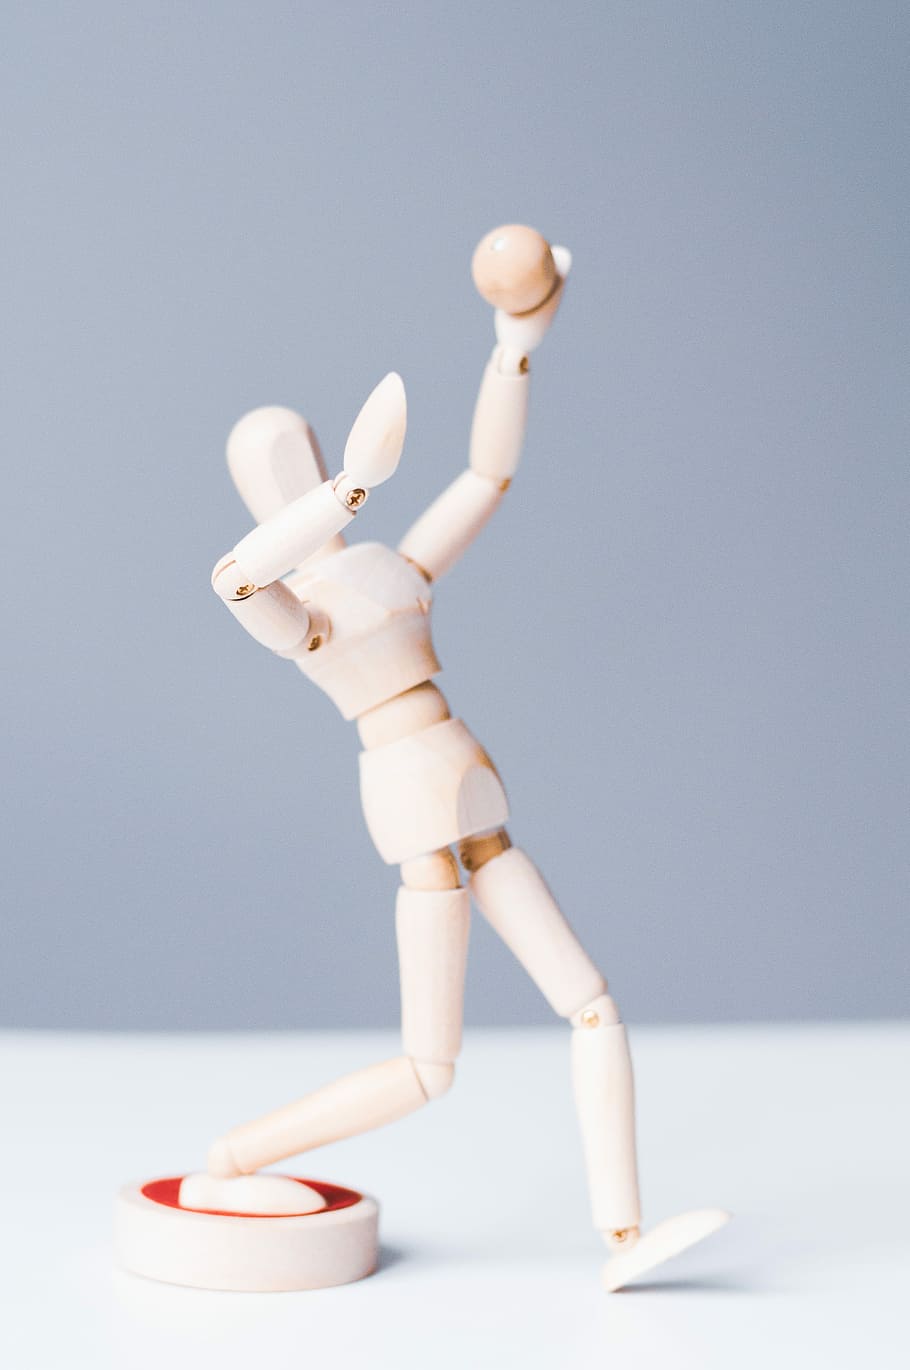 brown manikin figure on white surface, white wooden puppet, ball